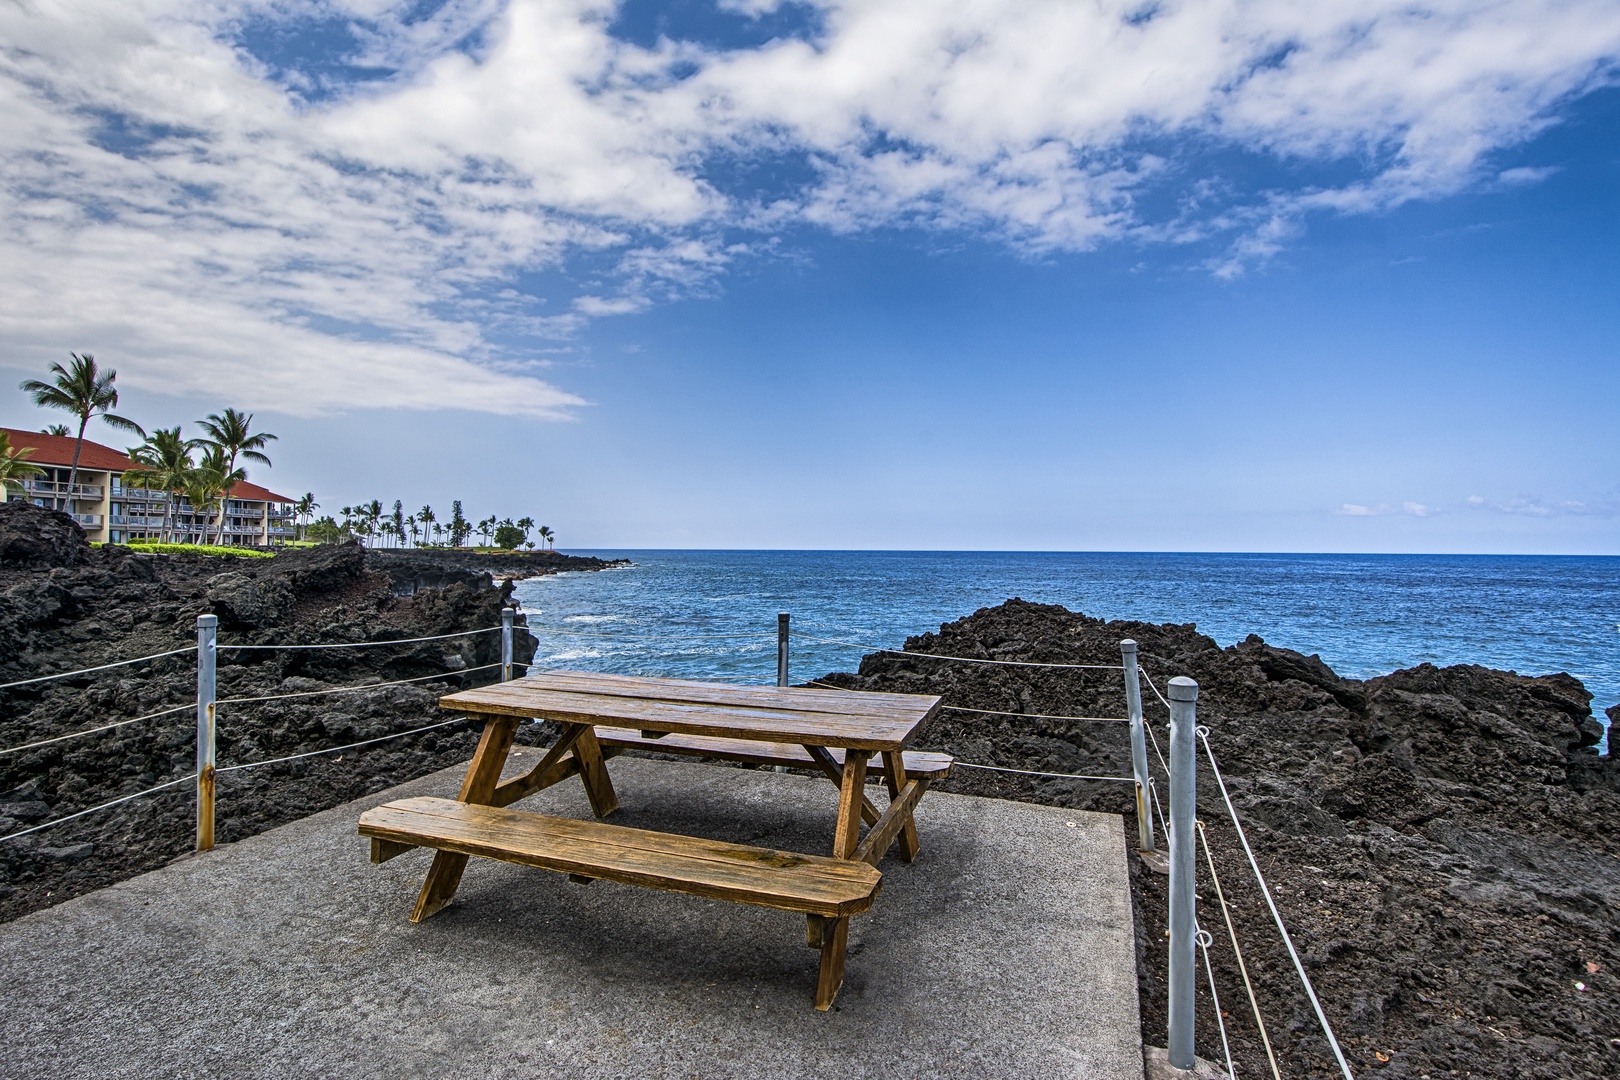 Kailua Kona Vacation Rentals, Keauhou Kona Surf & Racquet 2101 - Nature's dining room with a breathtaking ocean backdrop - the perfect picnic spot.